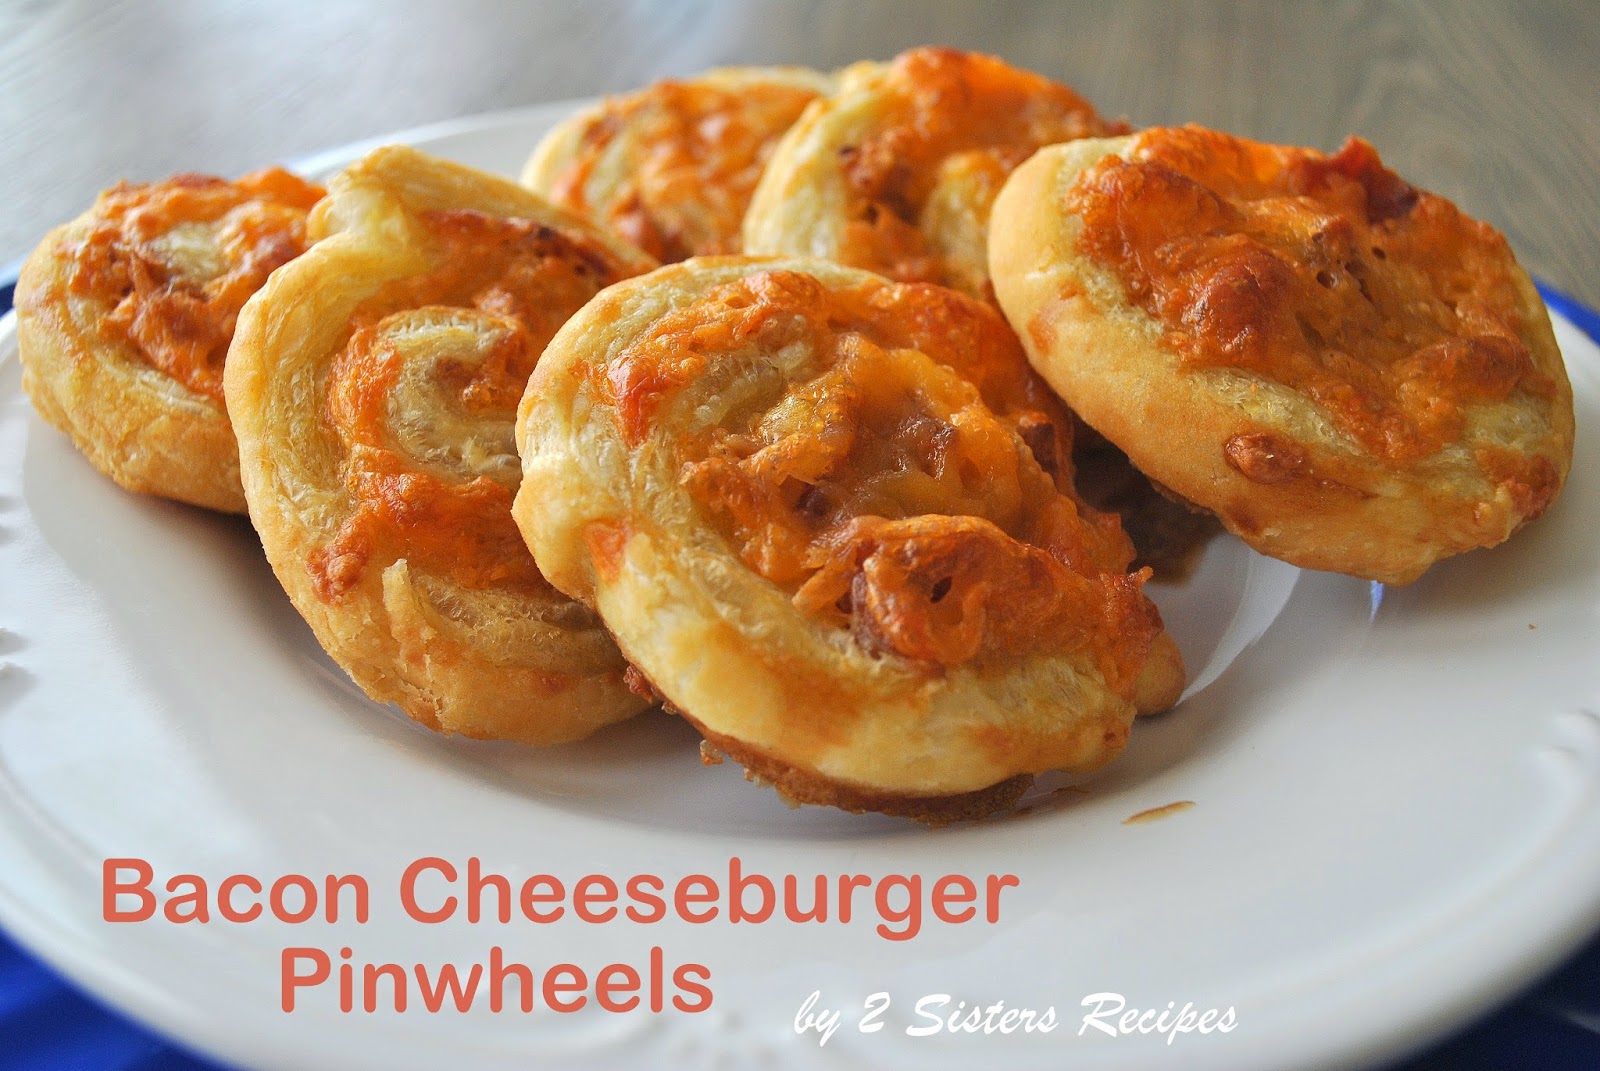 EASY Bacon Cheeseburger Pinwheels by 2sistersrecipes.com